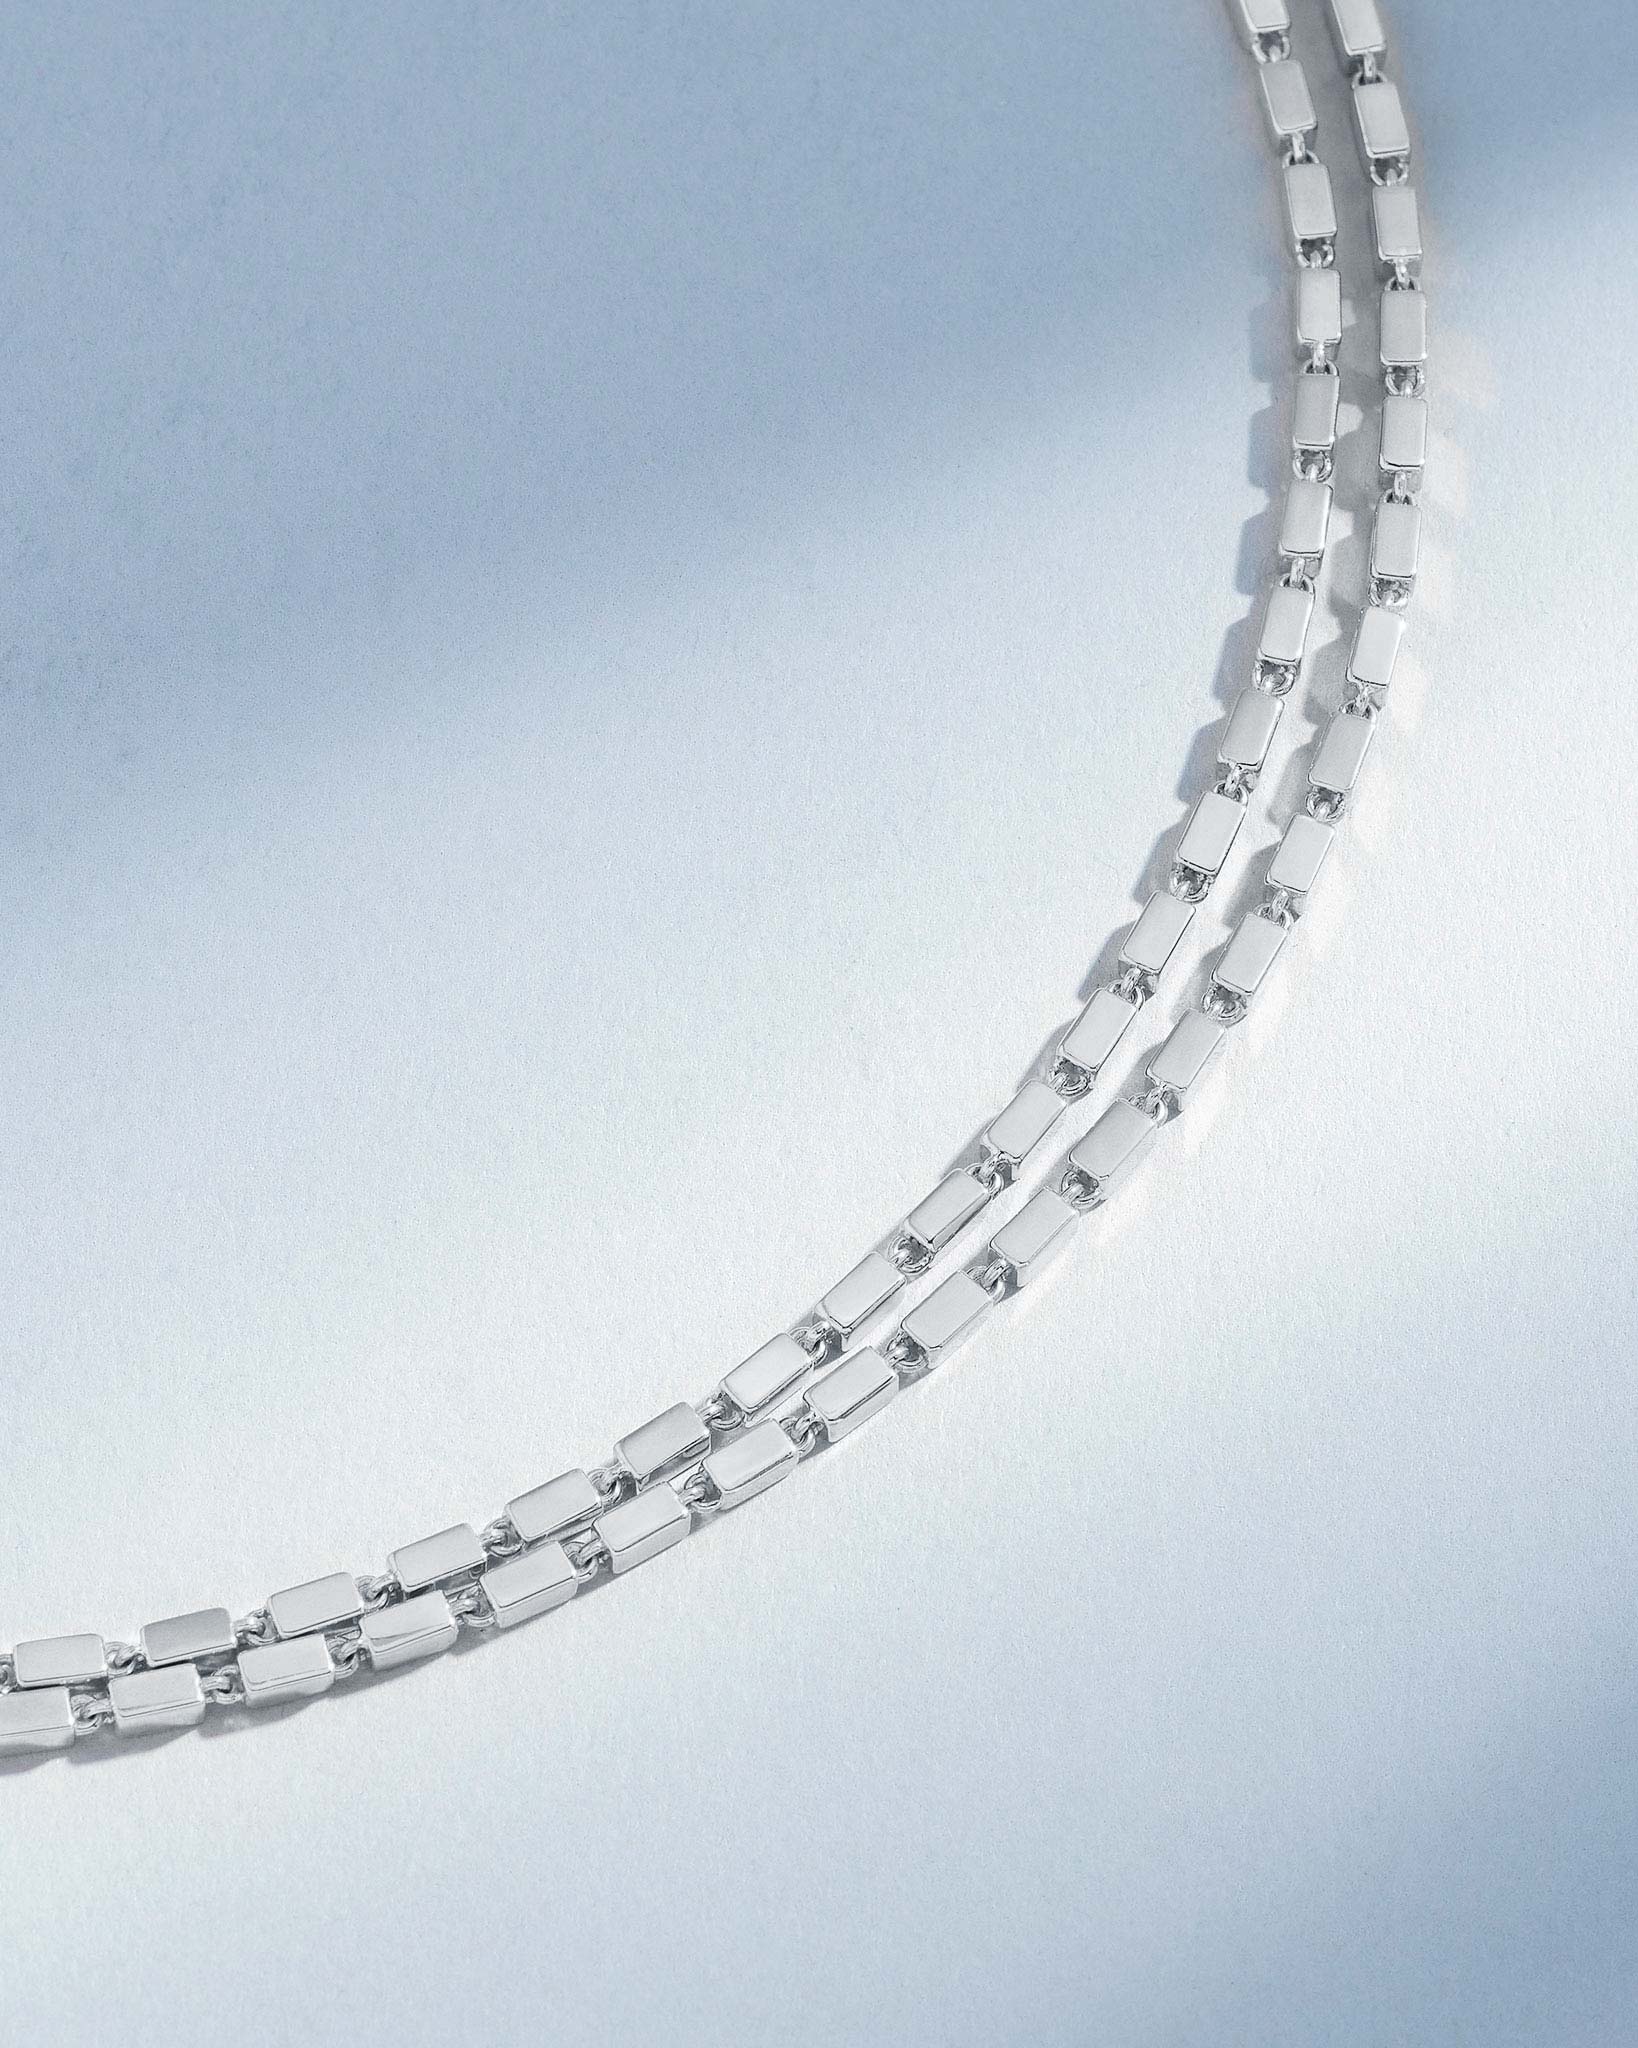 Suzanne Kalan Block-Chain Medium 36" Necklace in 18k white gold